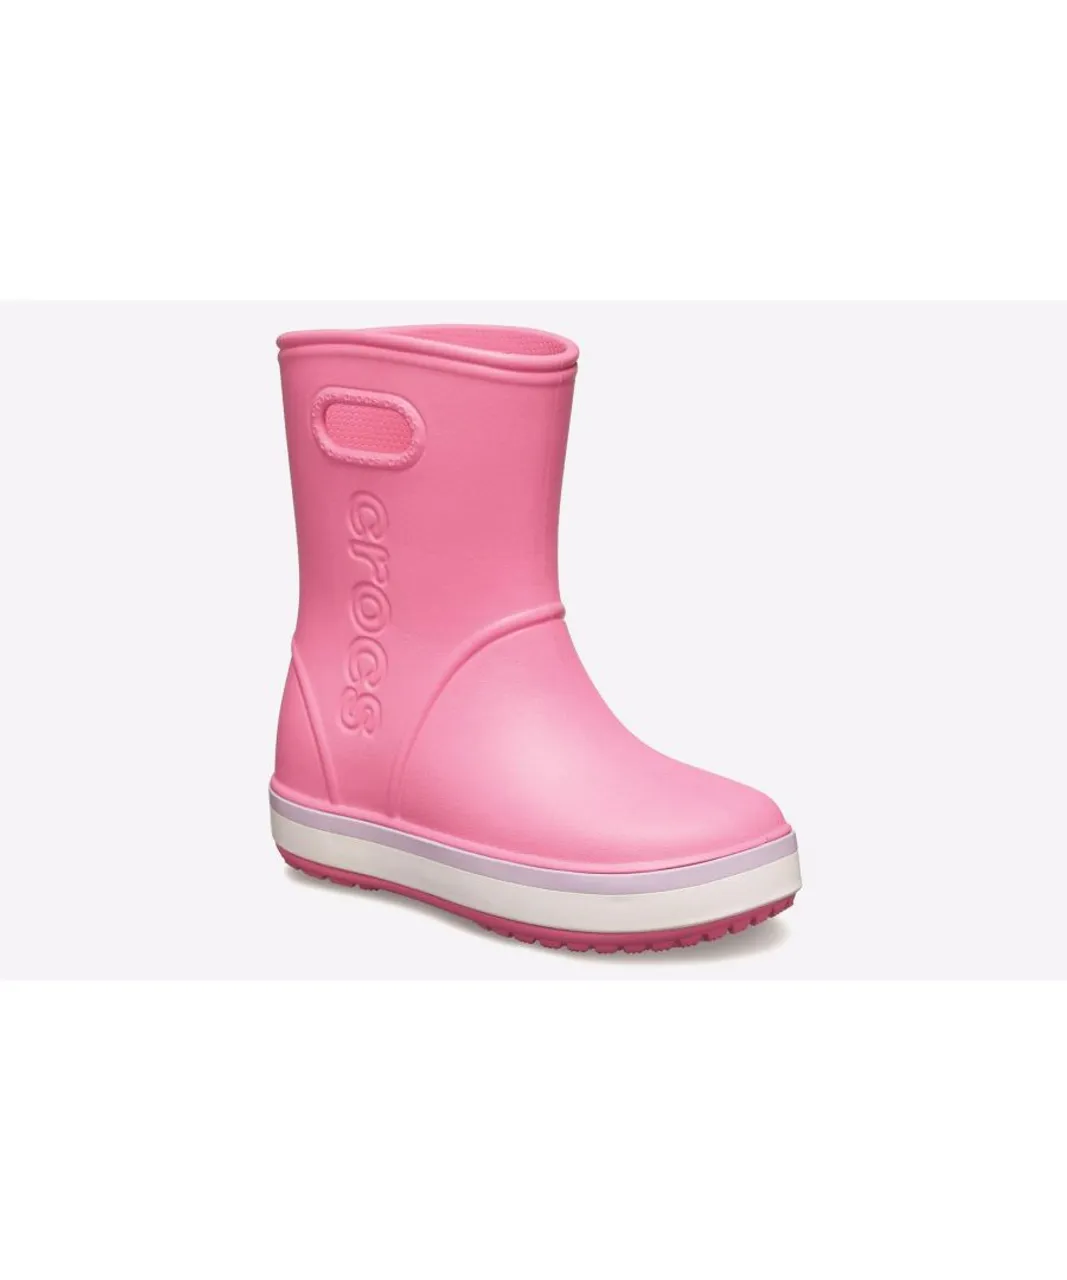 Crocs Childrens Unisex Crocband Rainboot Pull On Wellington Junior - Pink Mixed Material